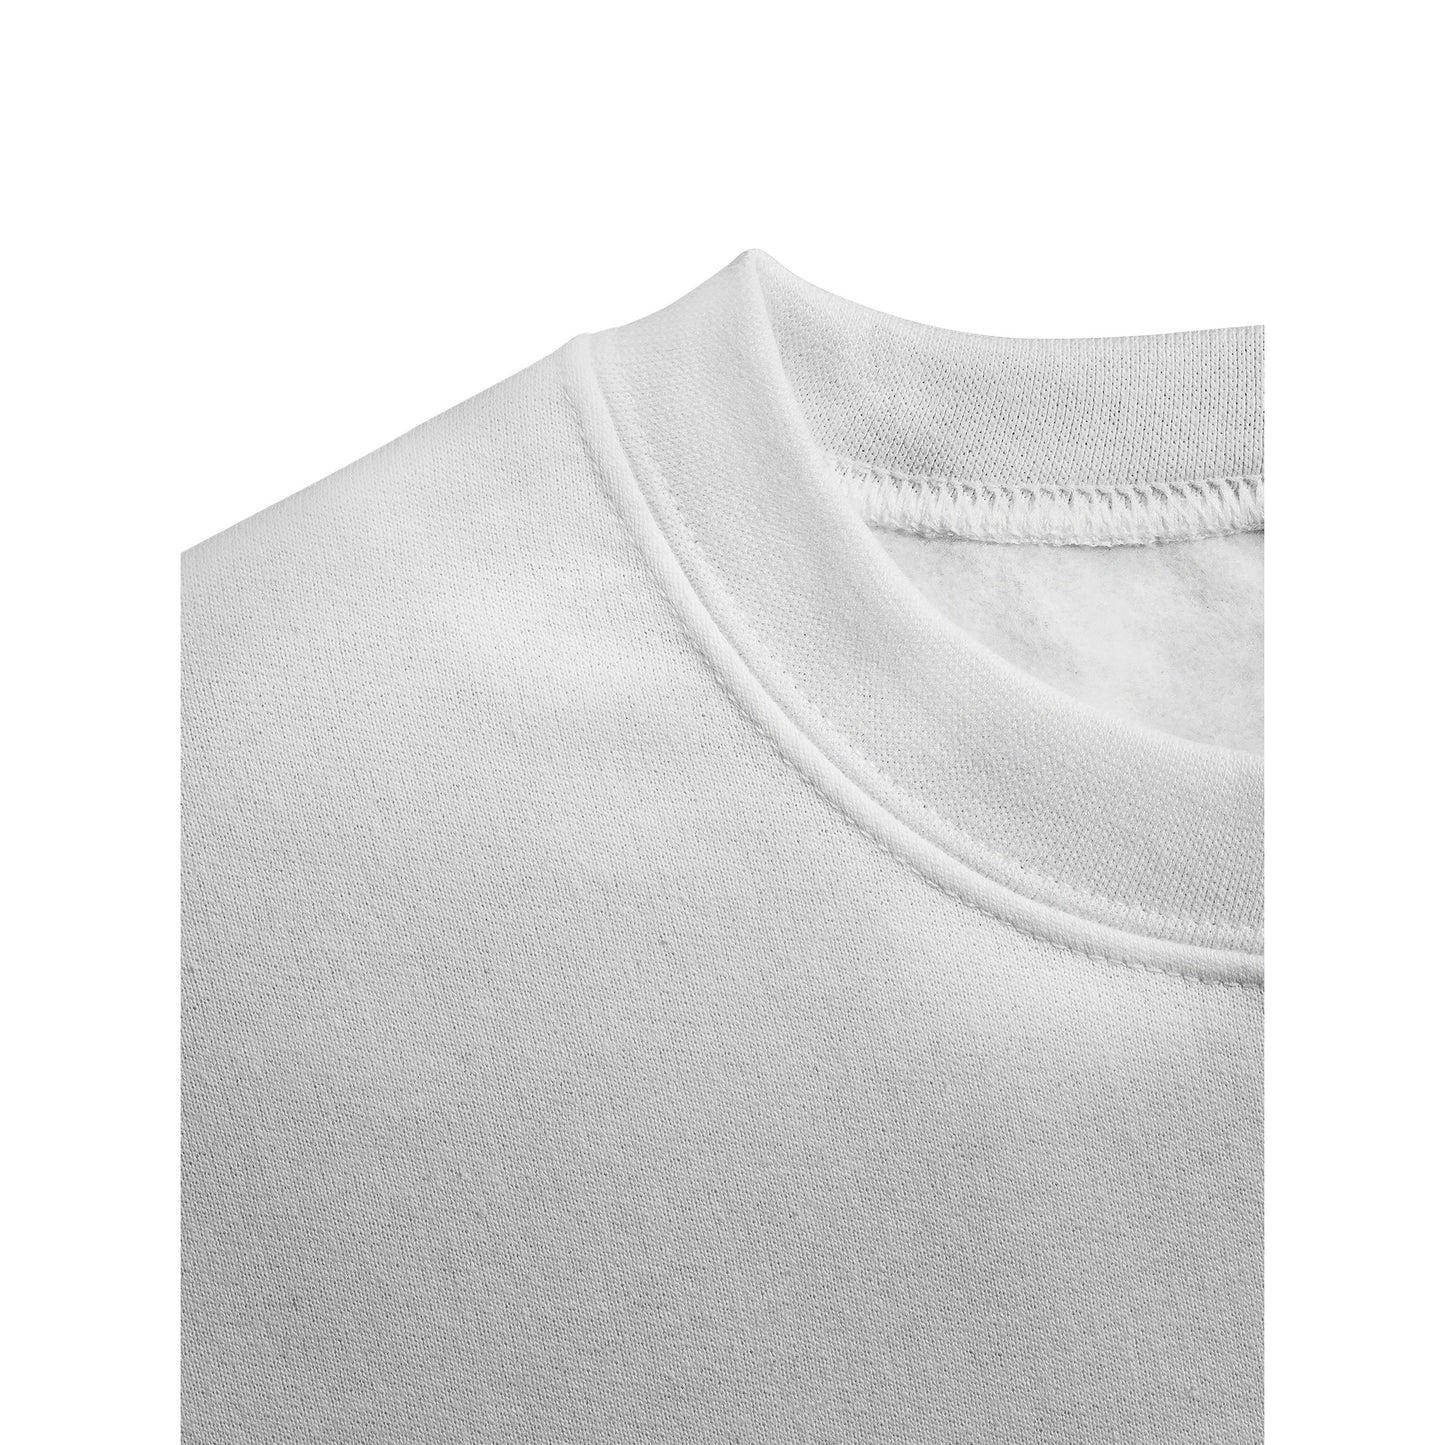 canvas dance / Gallery Staff Collection / Sweatshirt / white